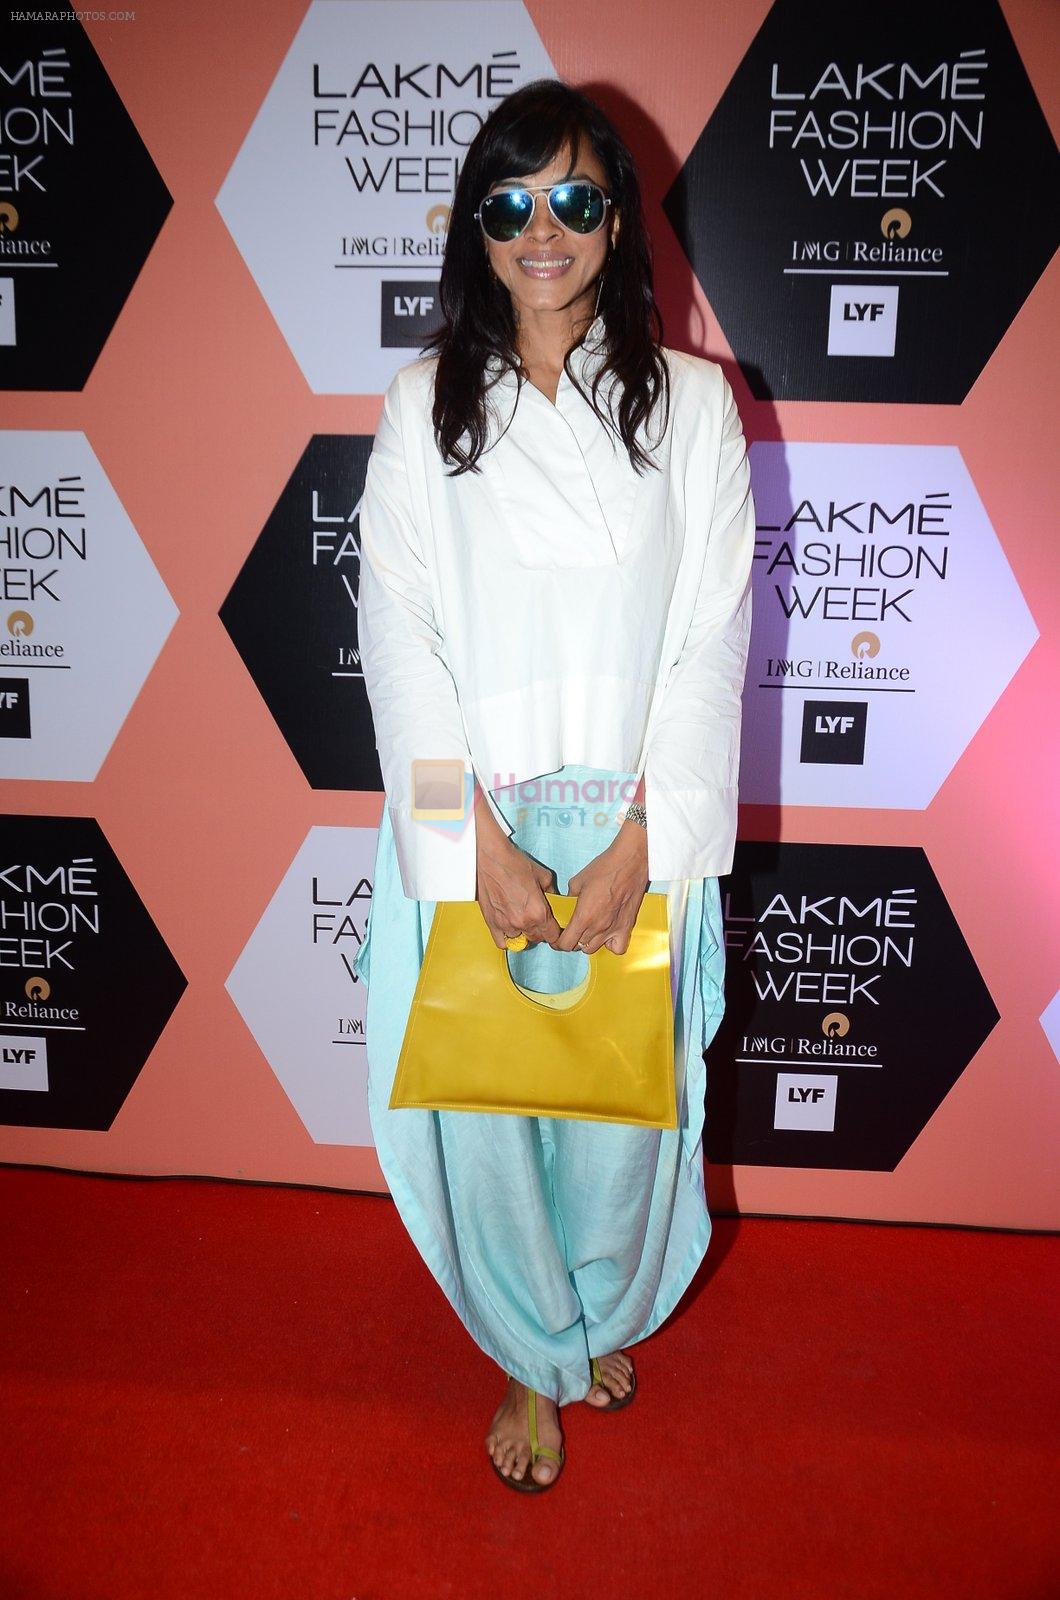 Manasi Scott on Day 4 at Lakme Fashion Week 2016 on 2nd April 2016